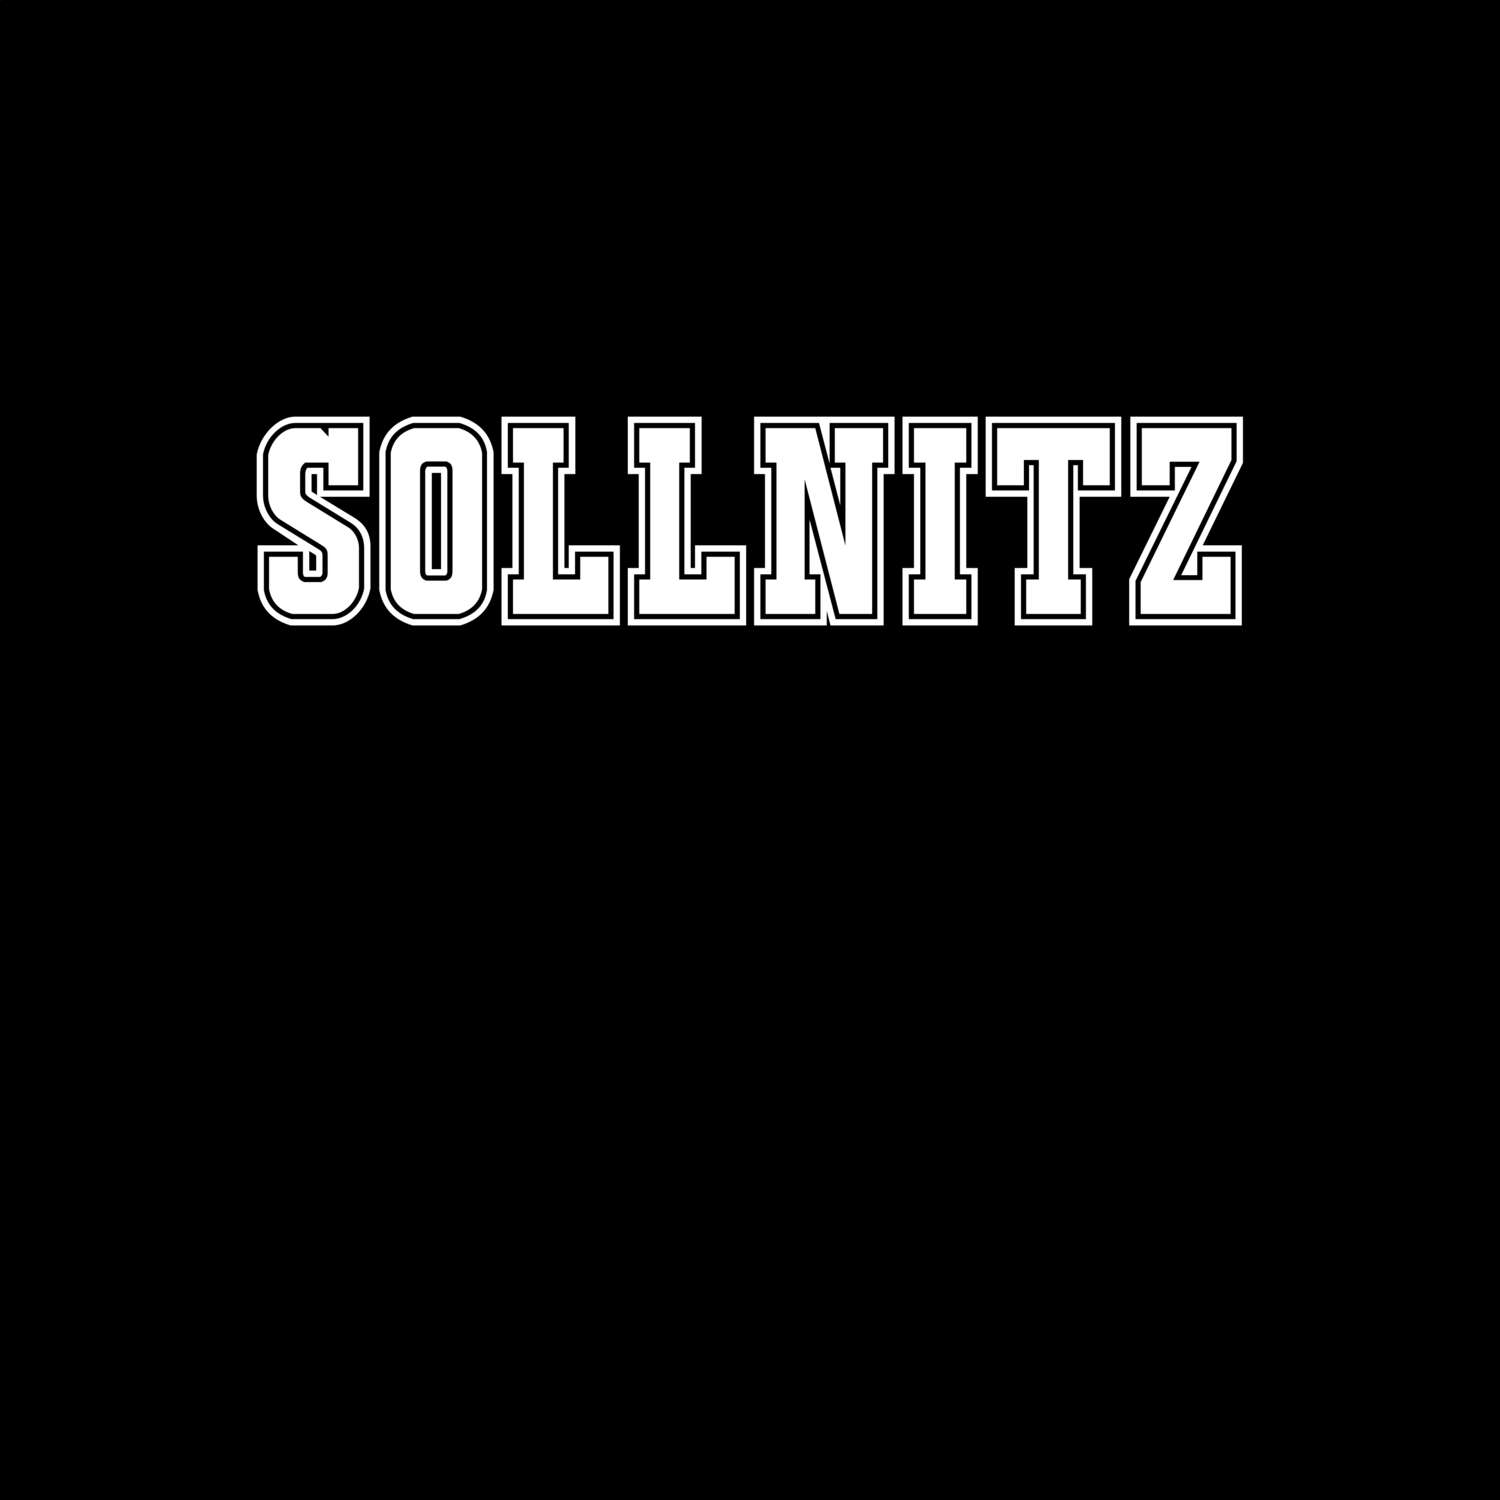 Sollnitz T-Shirt »Classic«